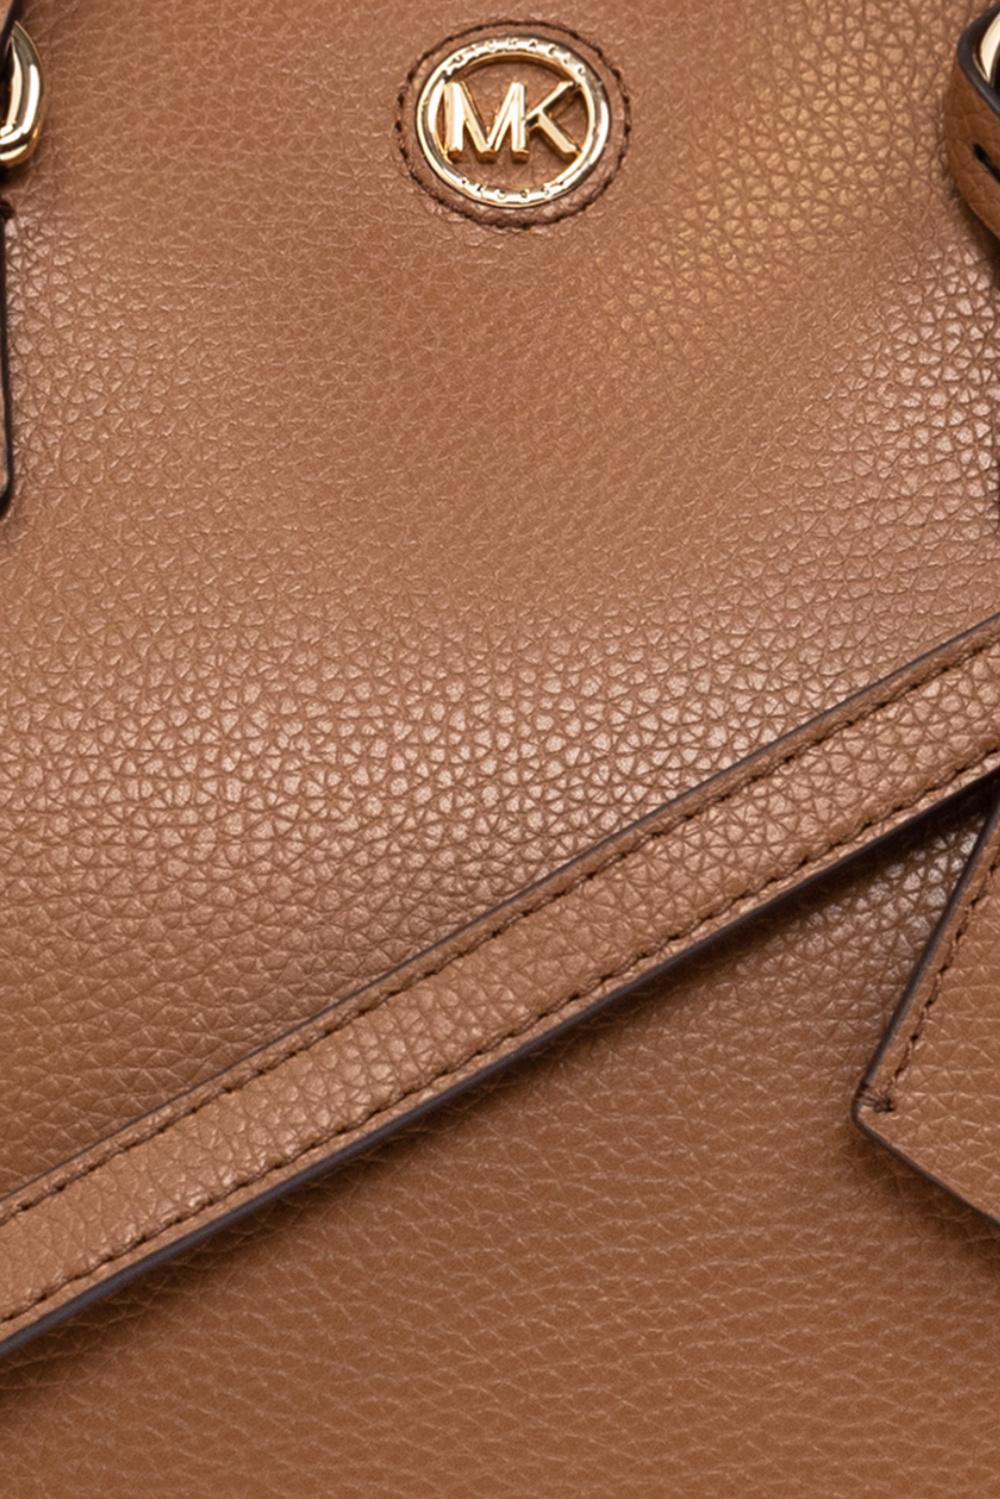 MICHAEL Michael Kors Chantal Medium Monogram Leather Satchel Bag